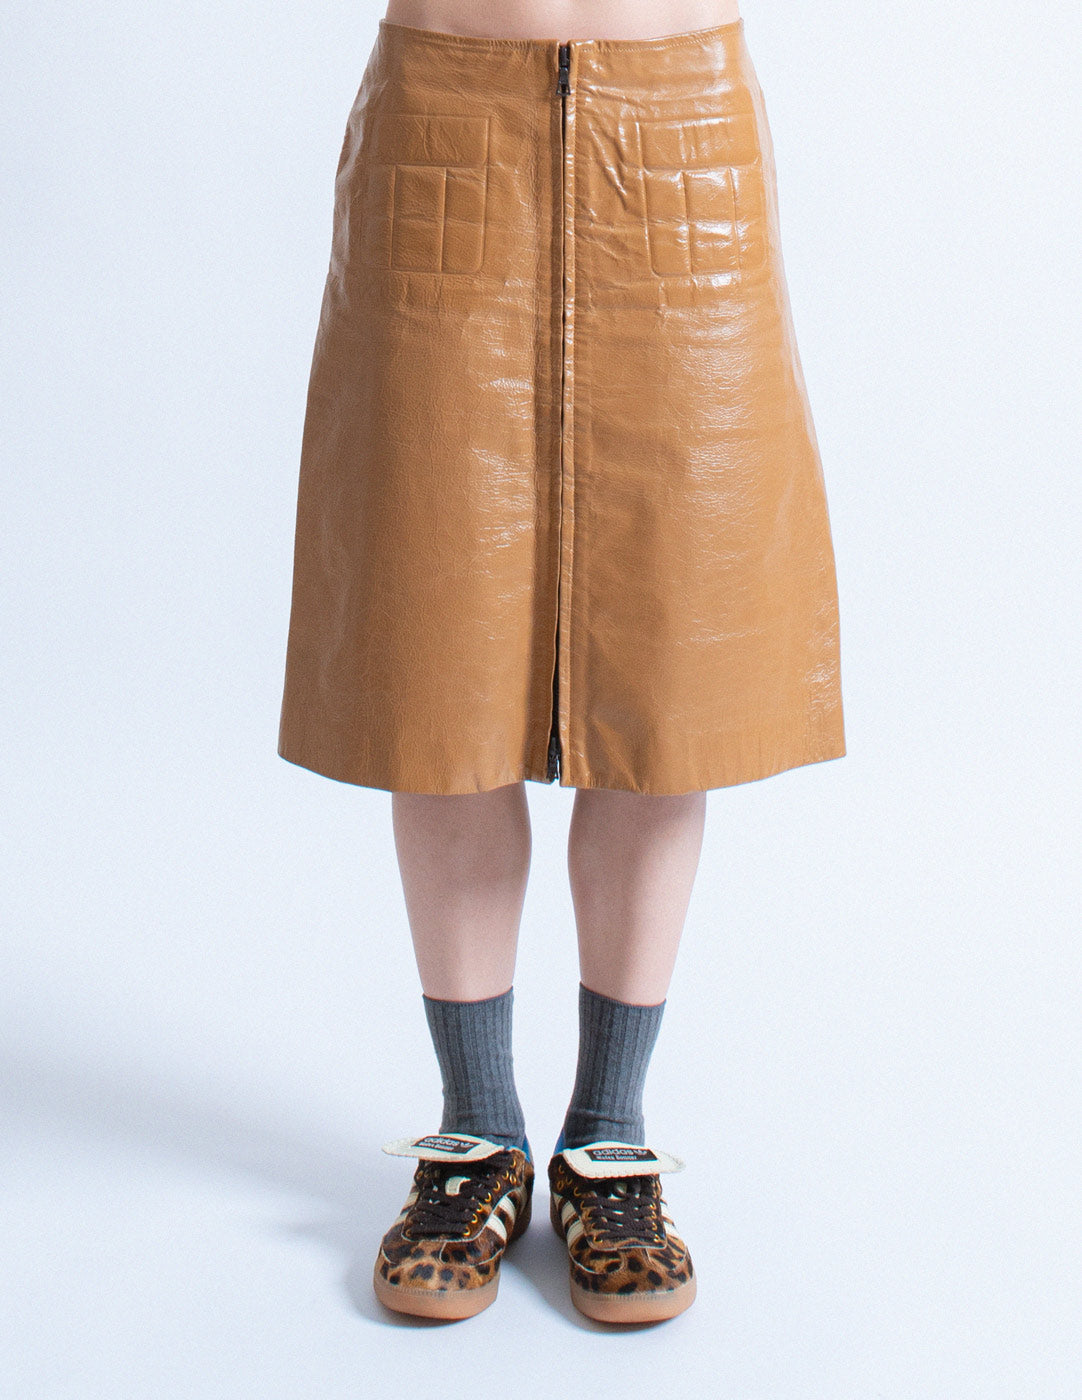 Miu Miu vintage caramel zipped leather skirt front detail